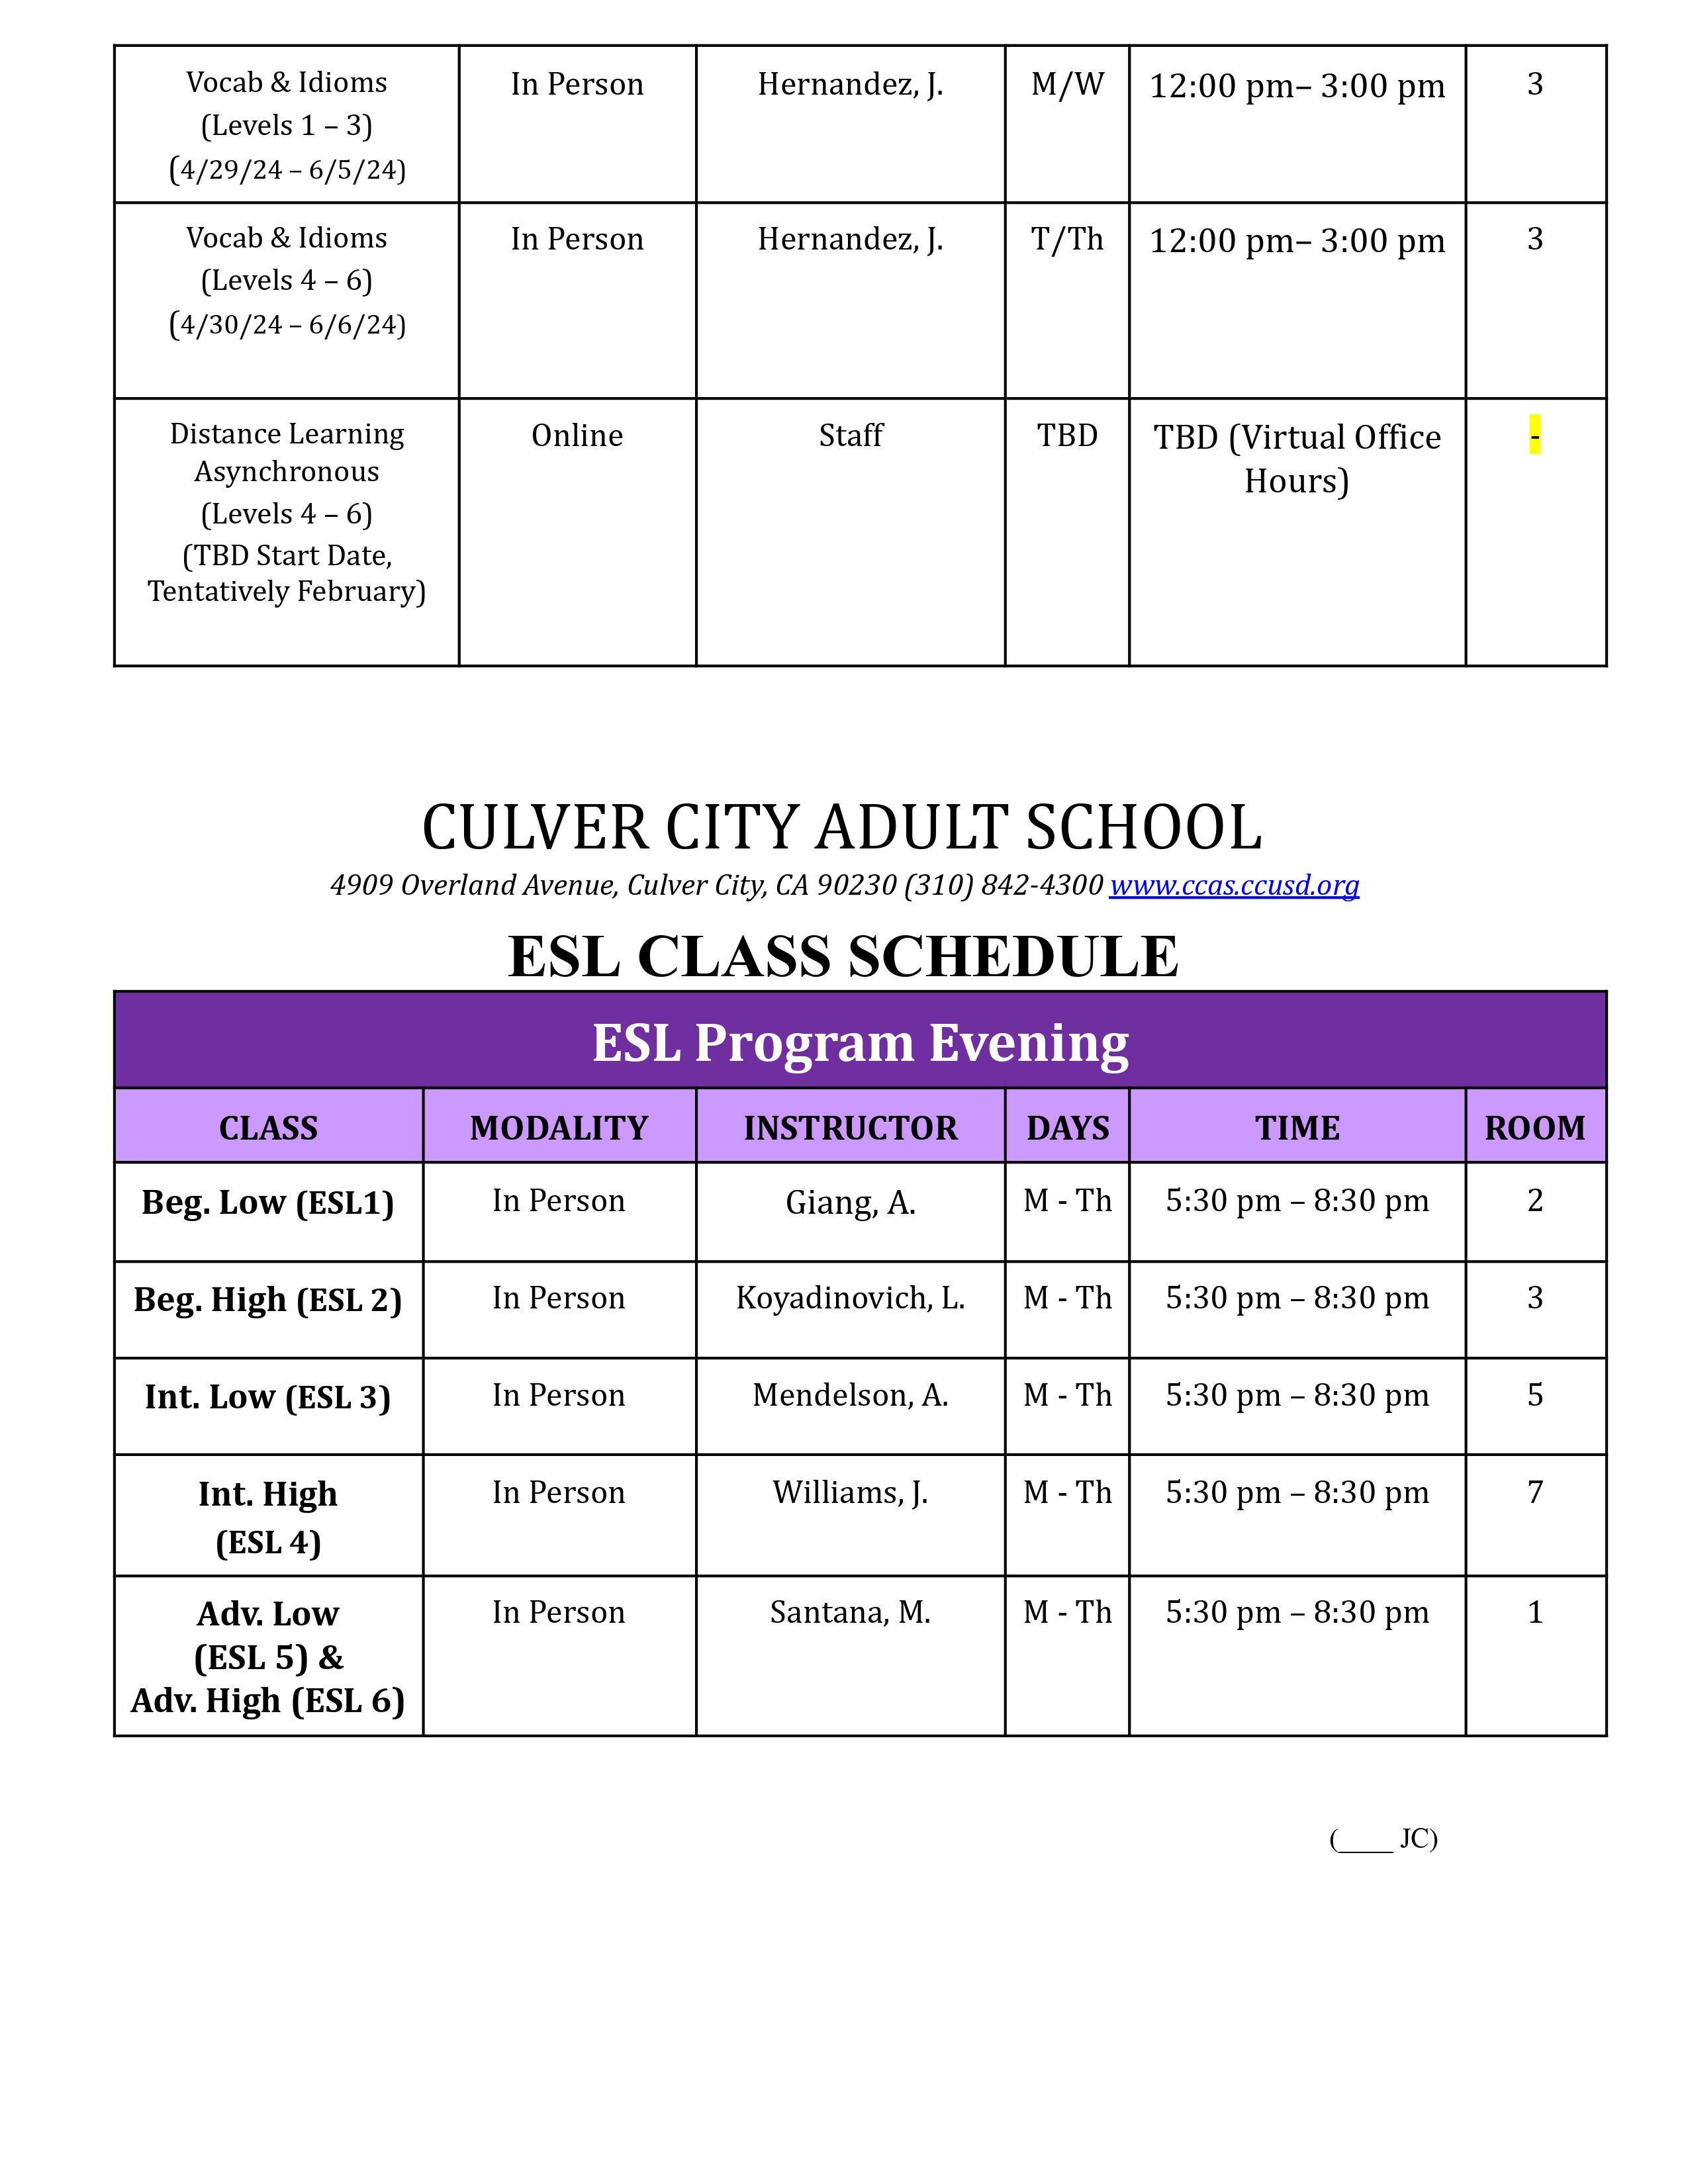 ESL Class schedule 2